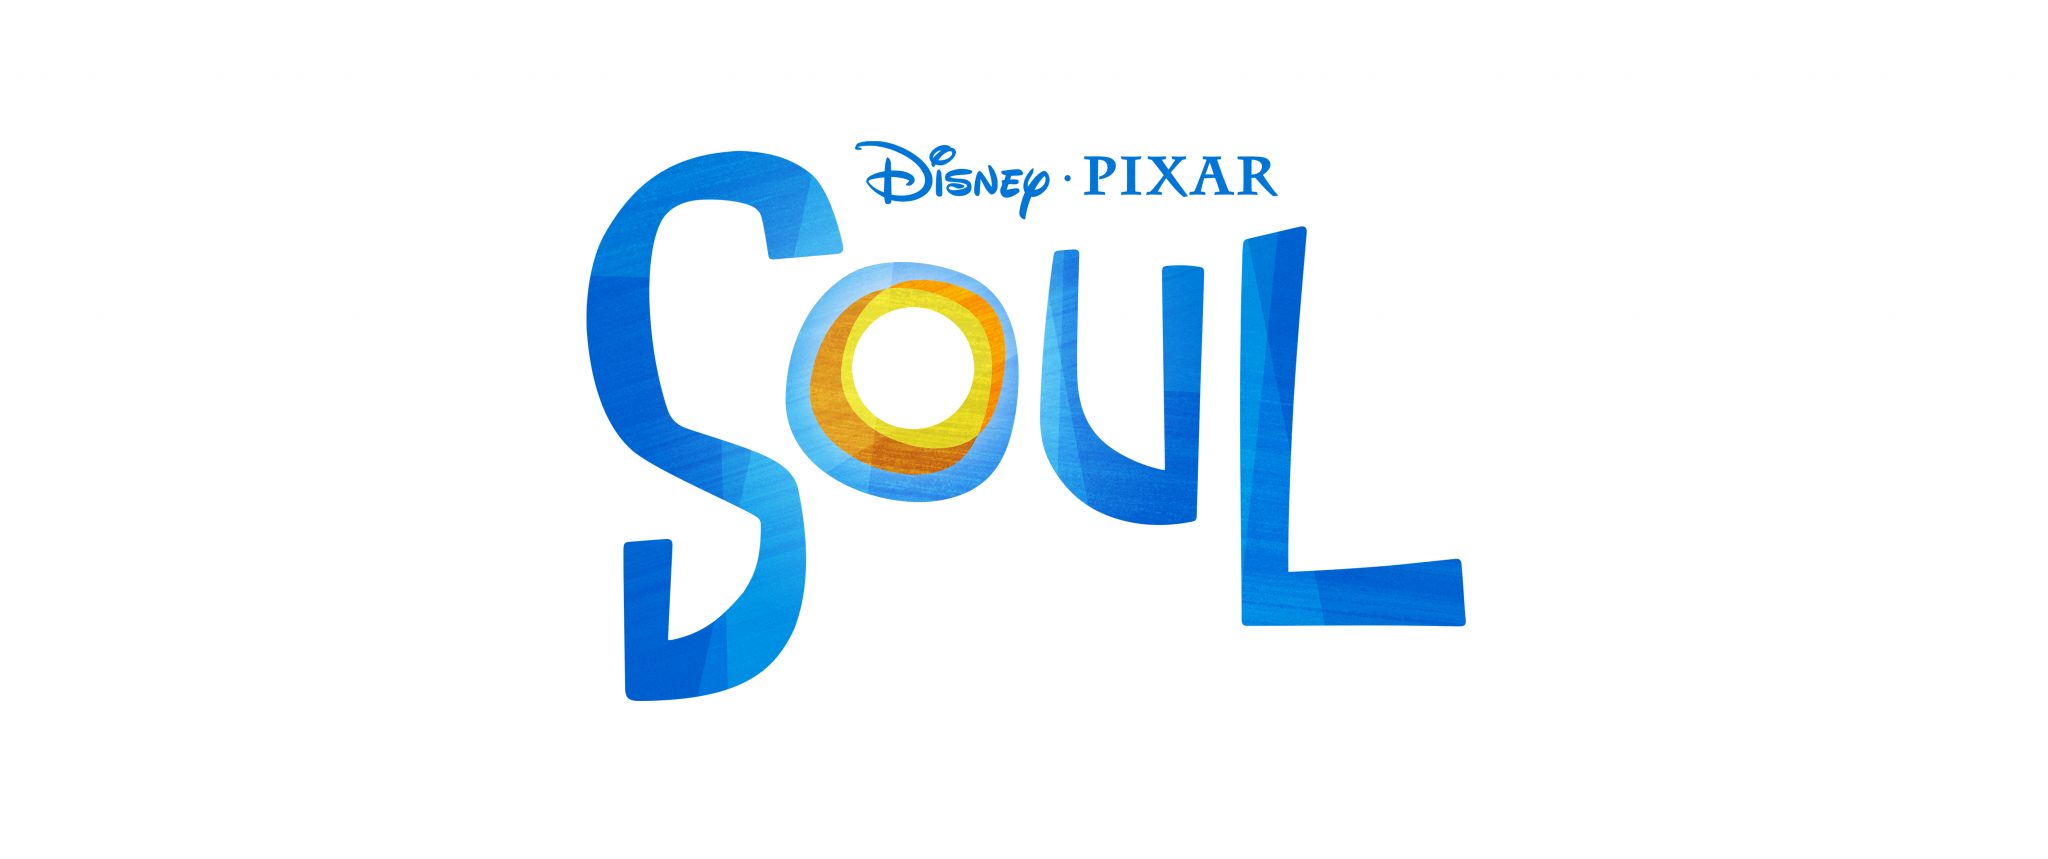 Disney announces new Pixar movie ‘Soul’ set for release in summer 2020